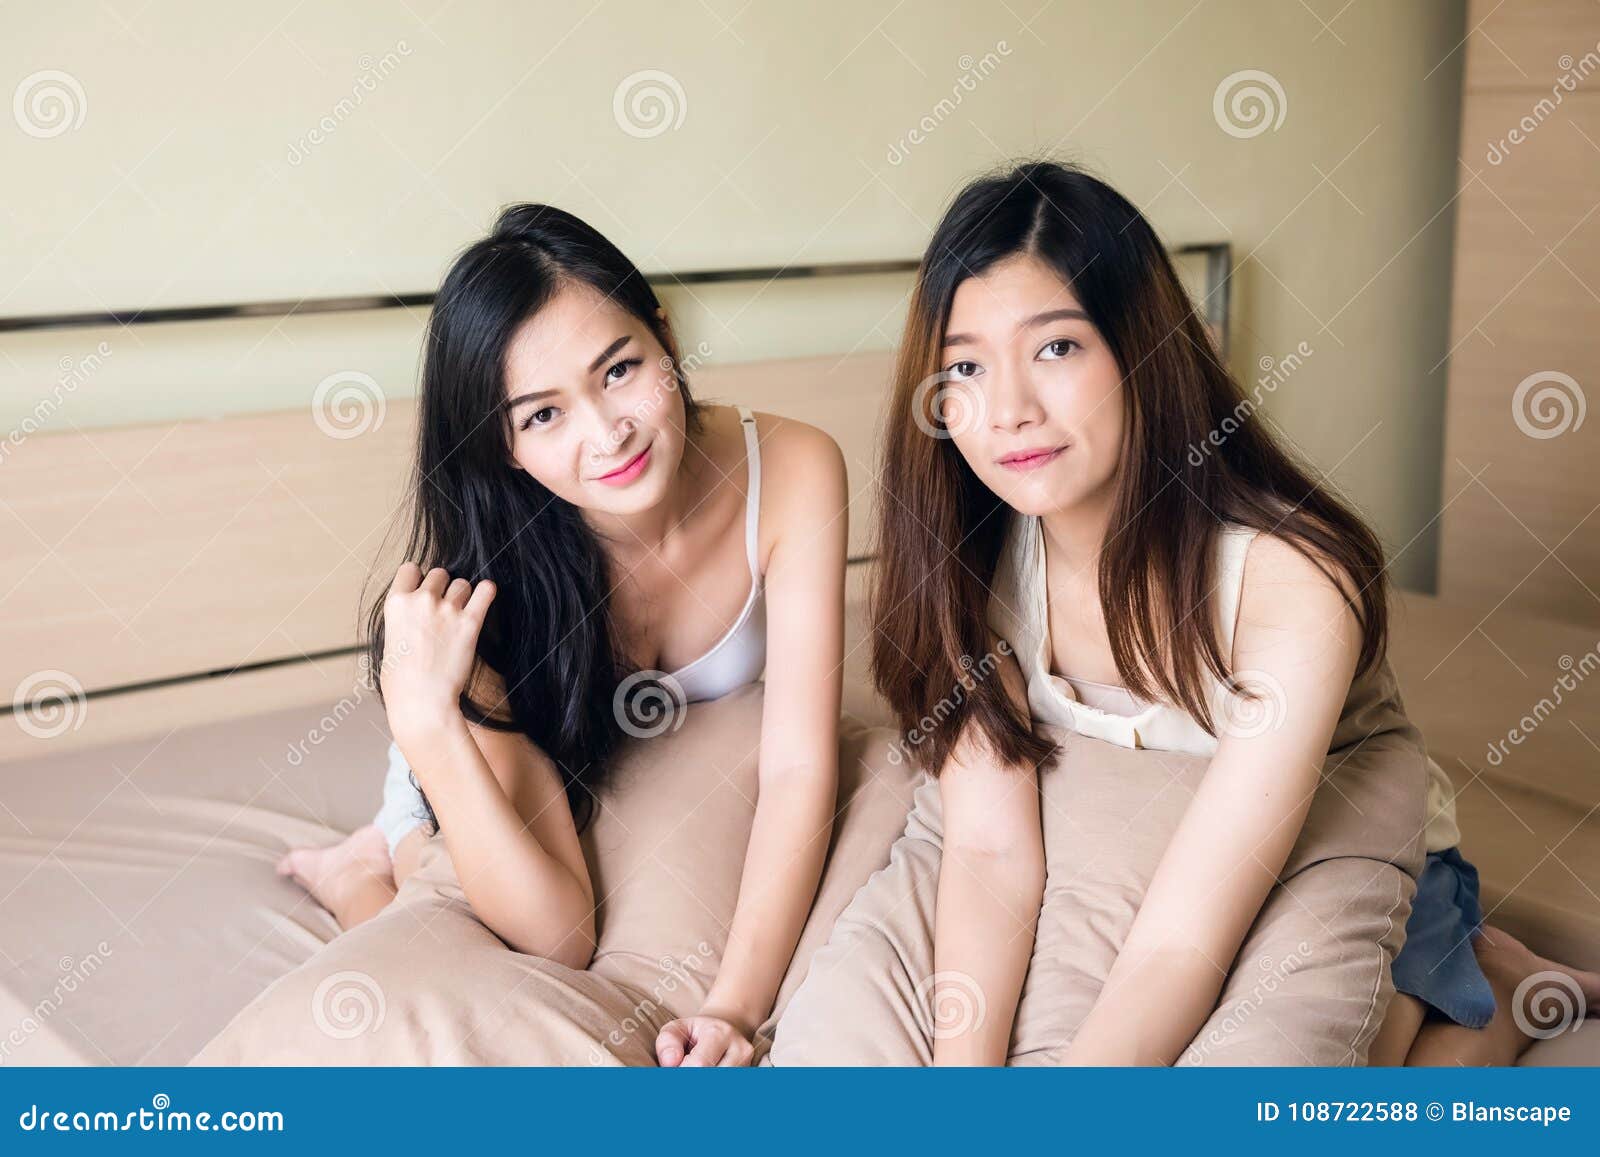 Asians lesbian